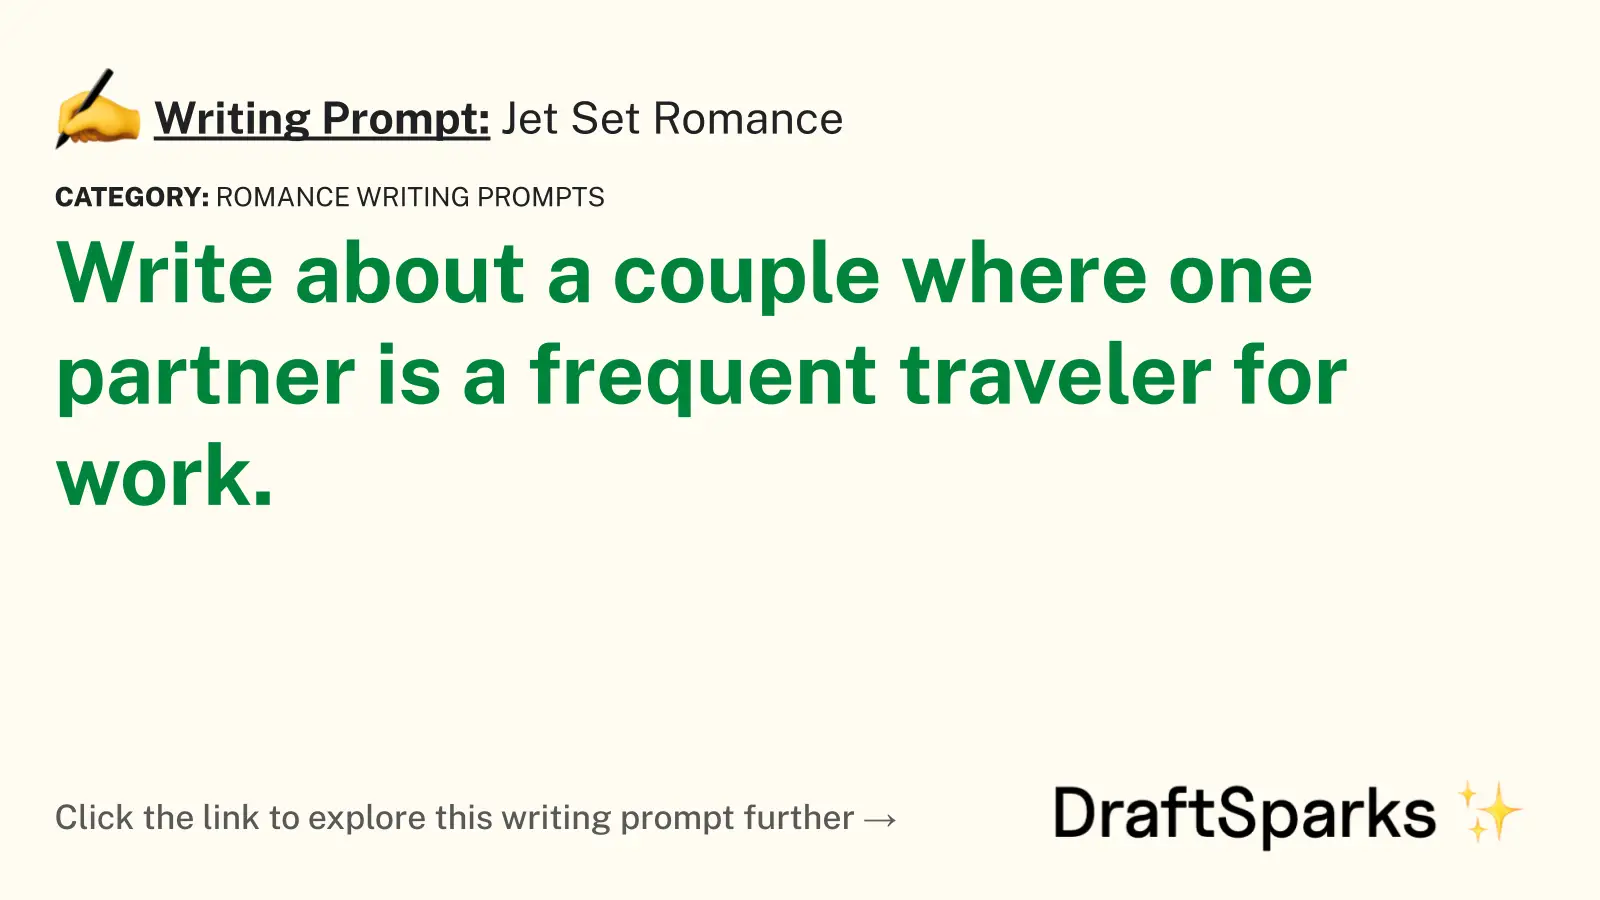 Jet Set Romance